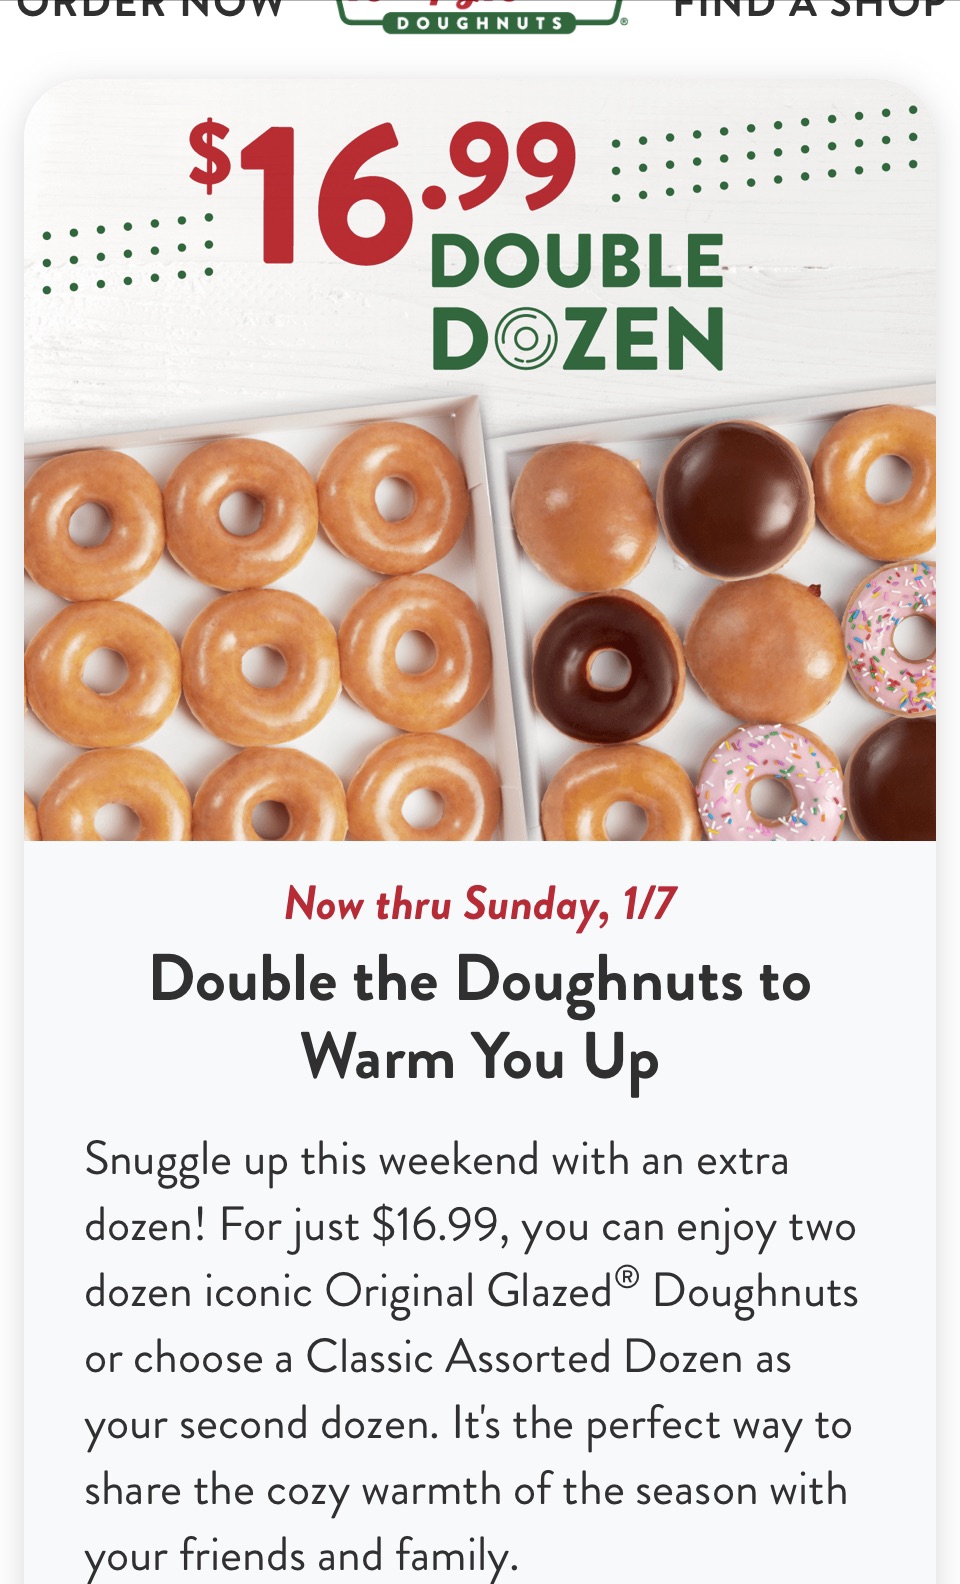 $16.99, you can enjoy two dozen iconic Original Glazed® Doughnuts or choose a Classic Assorted Dozen as your second dozen